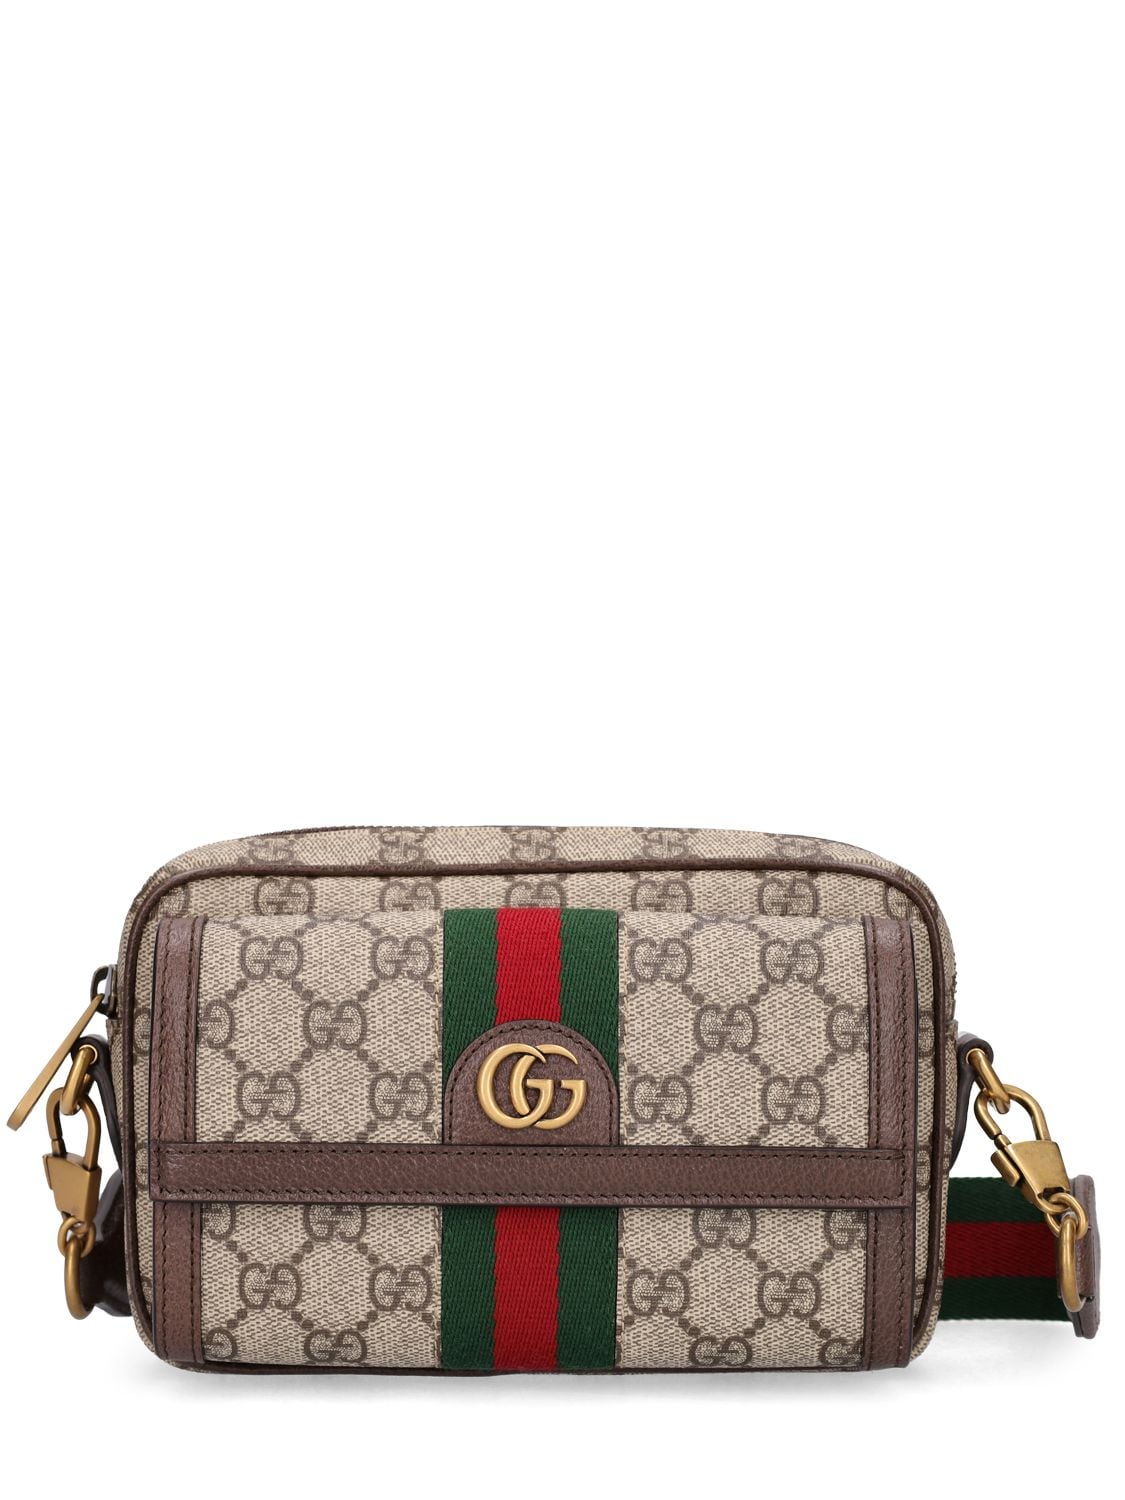 Gucci Ophidia Gg Supreme Mini Bag In Beige,ebony